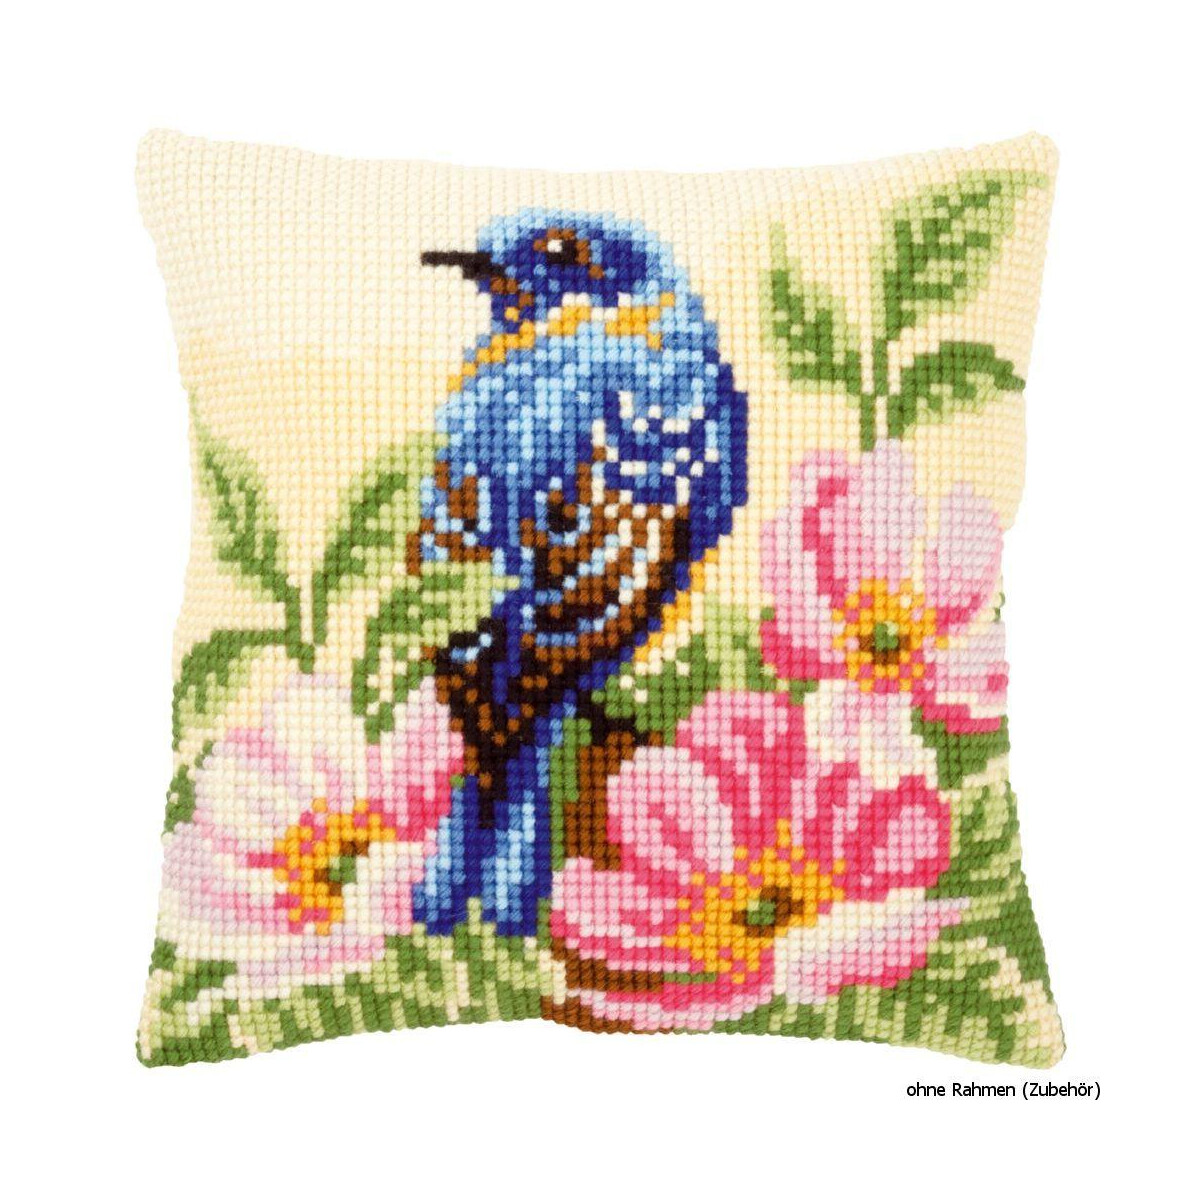 Vervaco stamped cross stitch kit cushion Bird on rose...